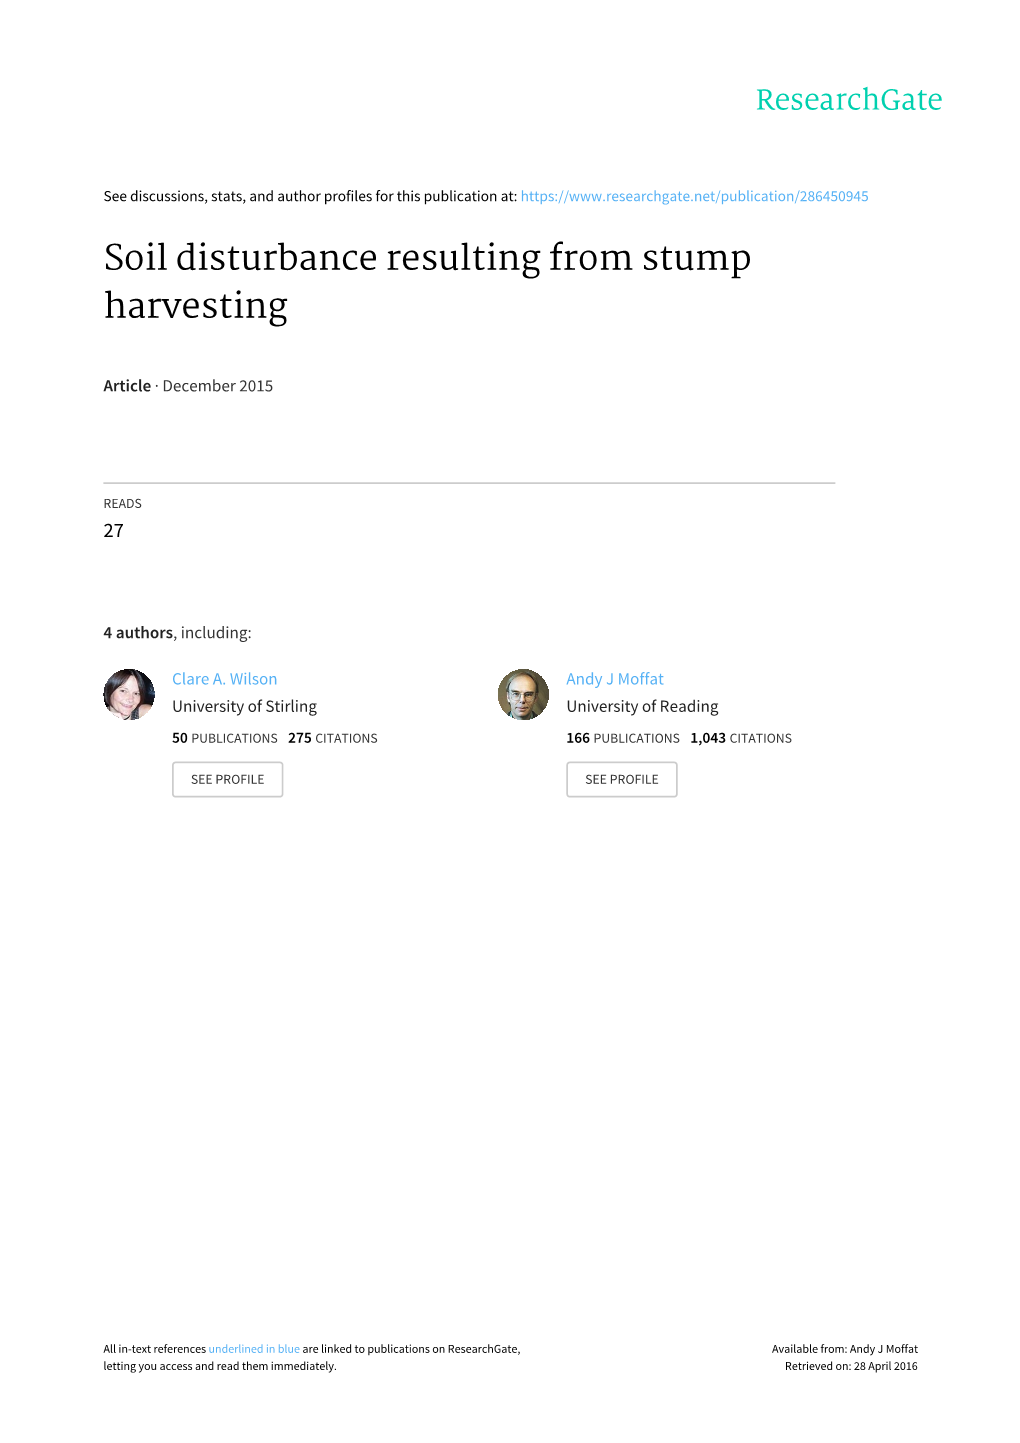 Soil Disturbance Resulting from Stump Harvesting